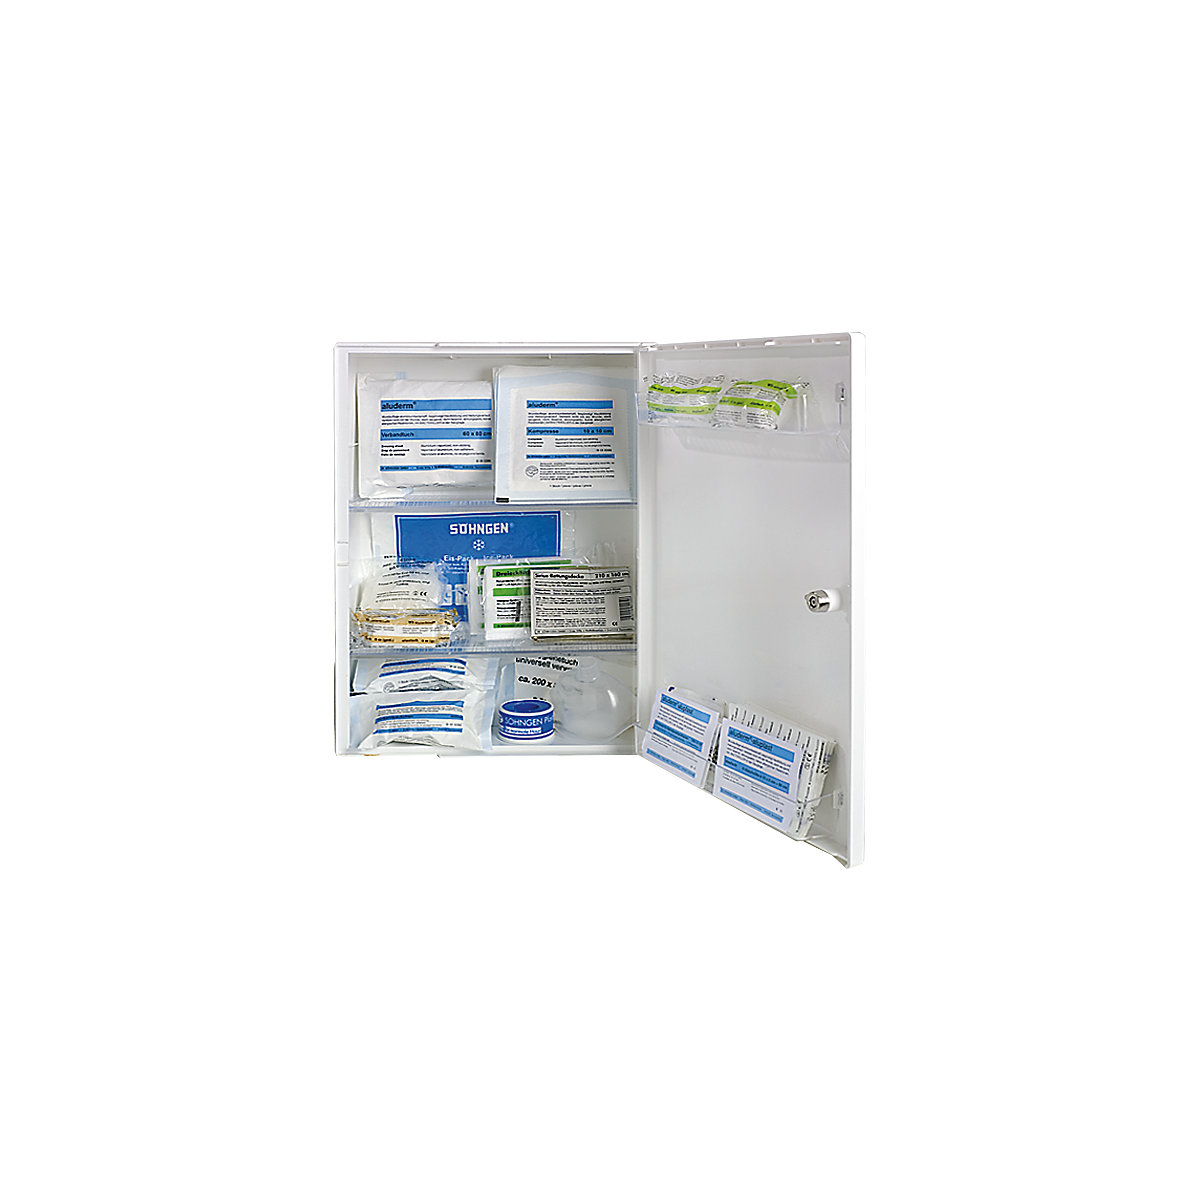 First aid cupboard, DIN 13157 - SÖHNGEN